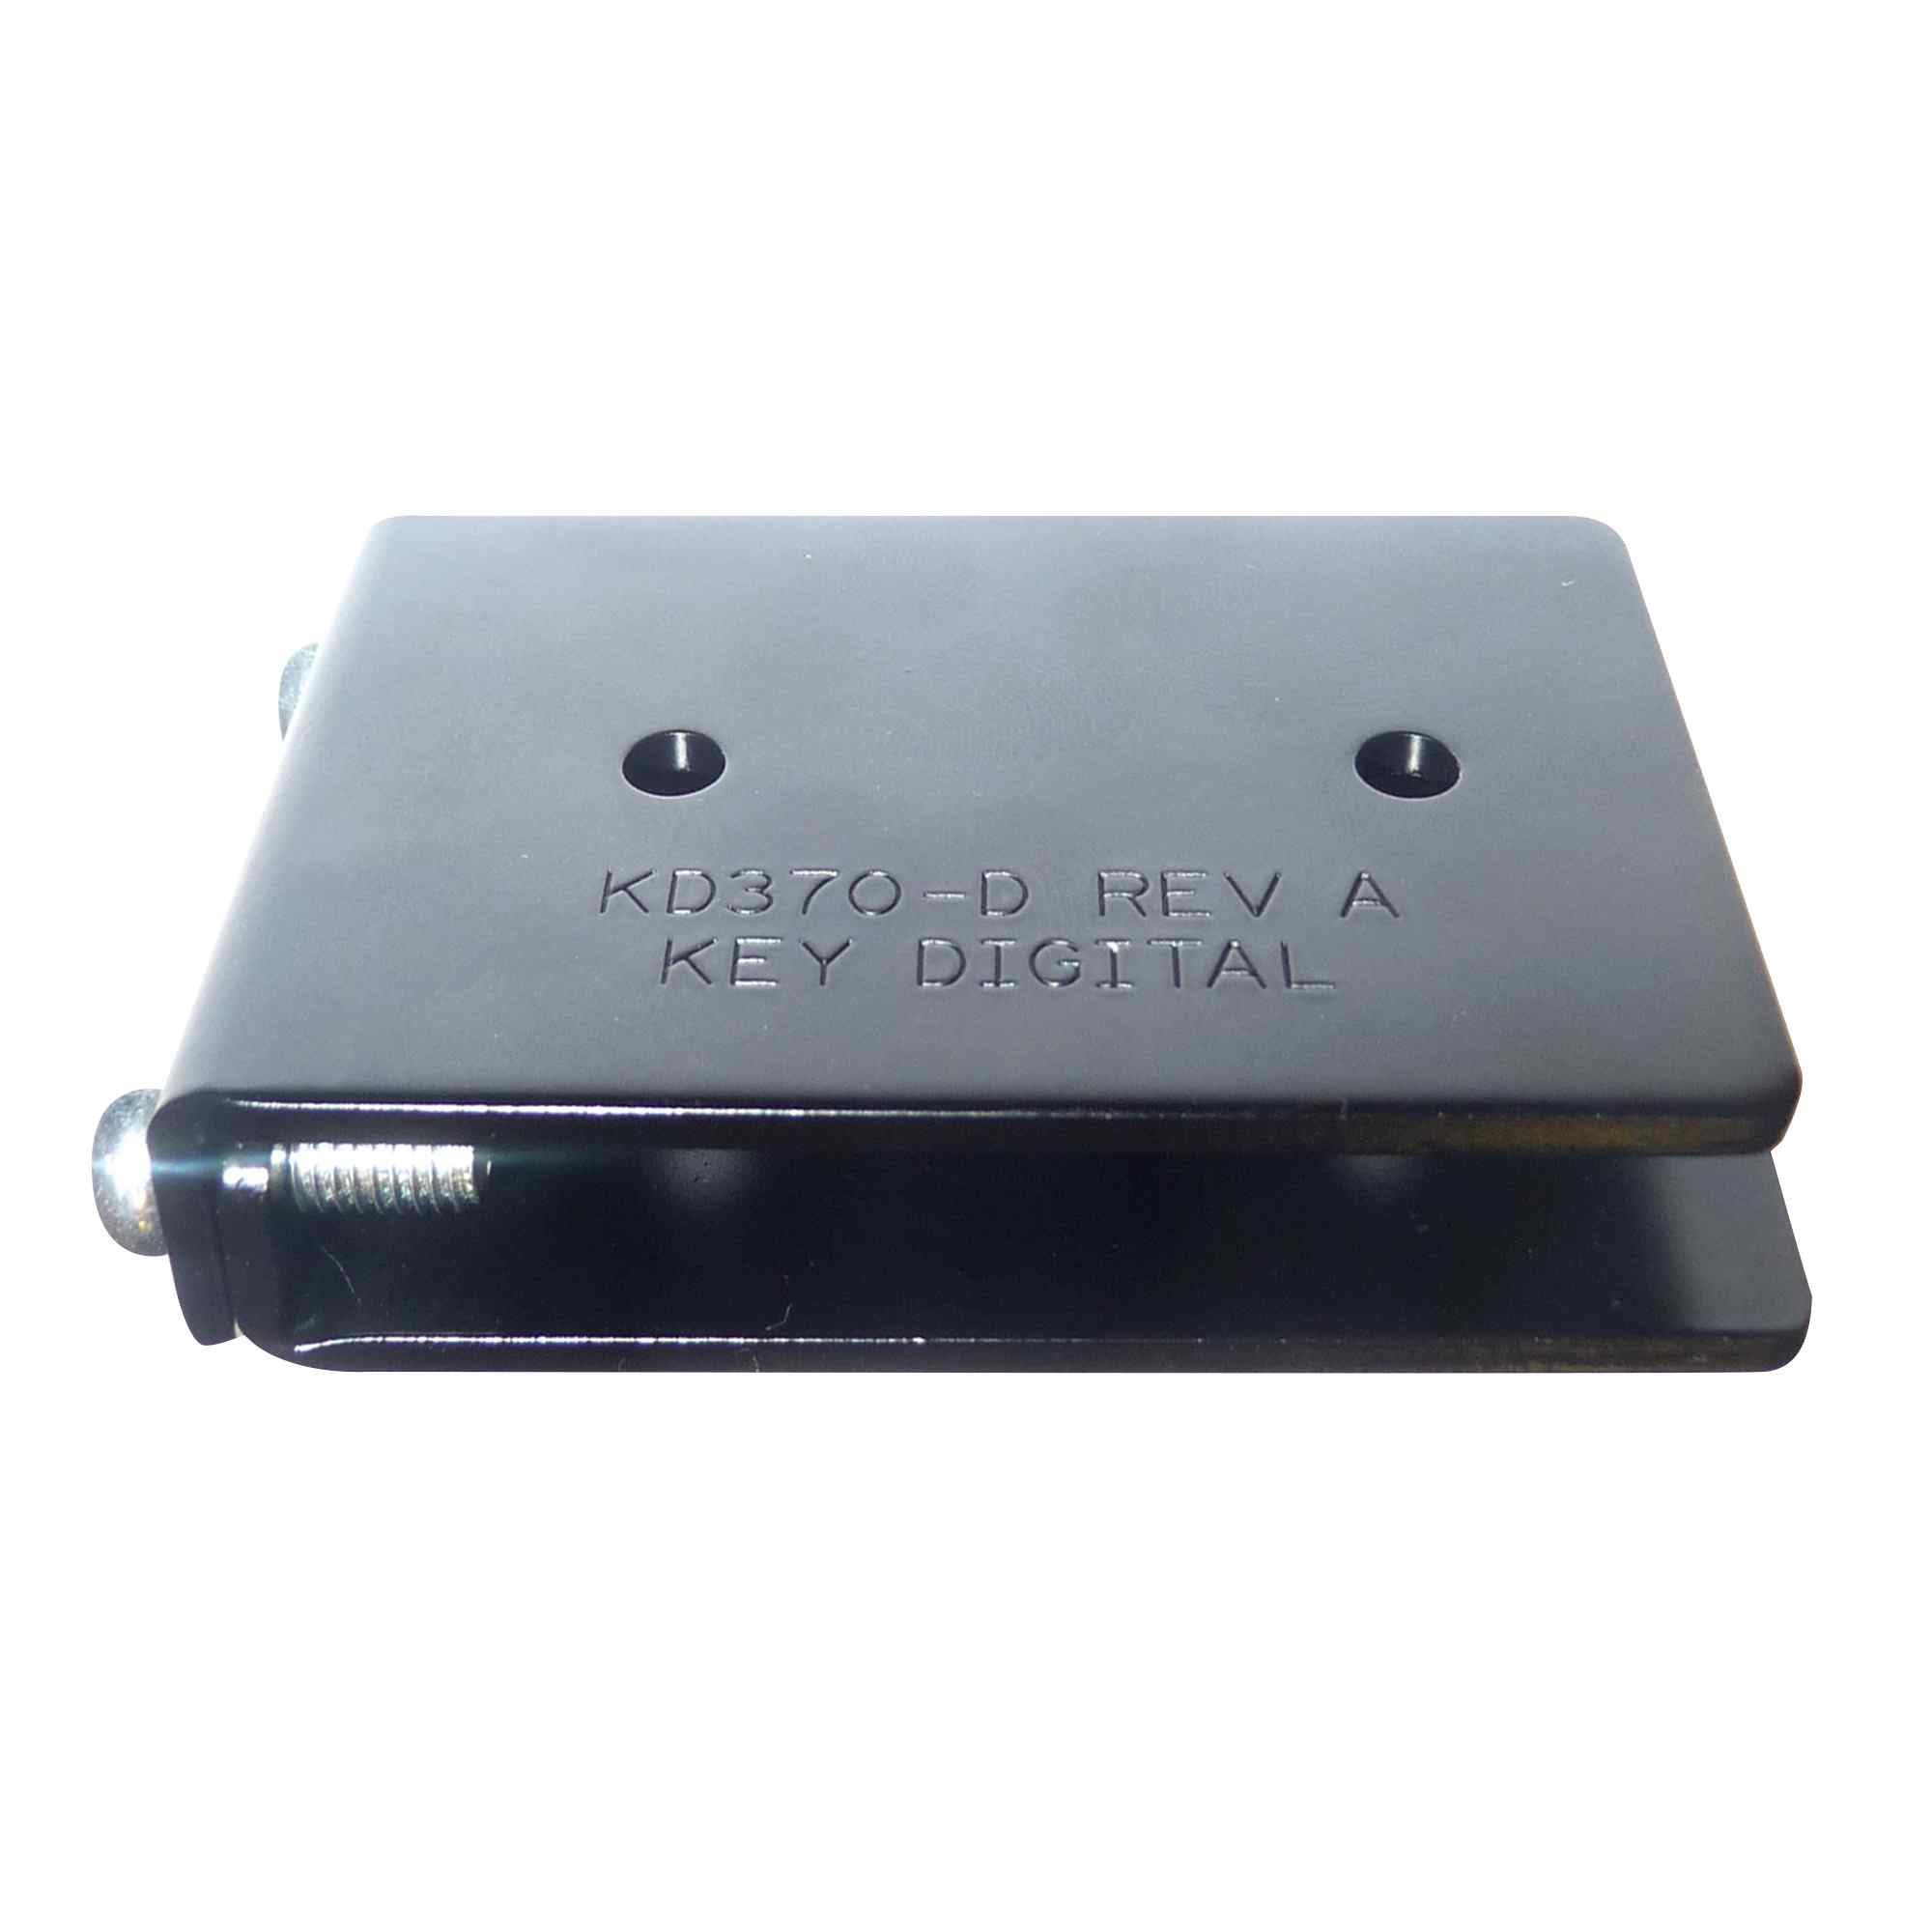 Thumbnail of Key Digital mounting adapter front view